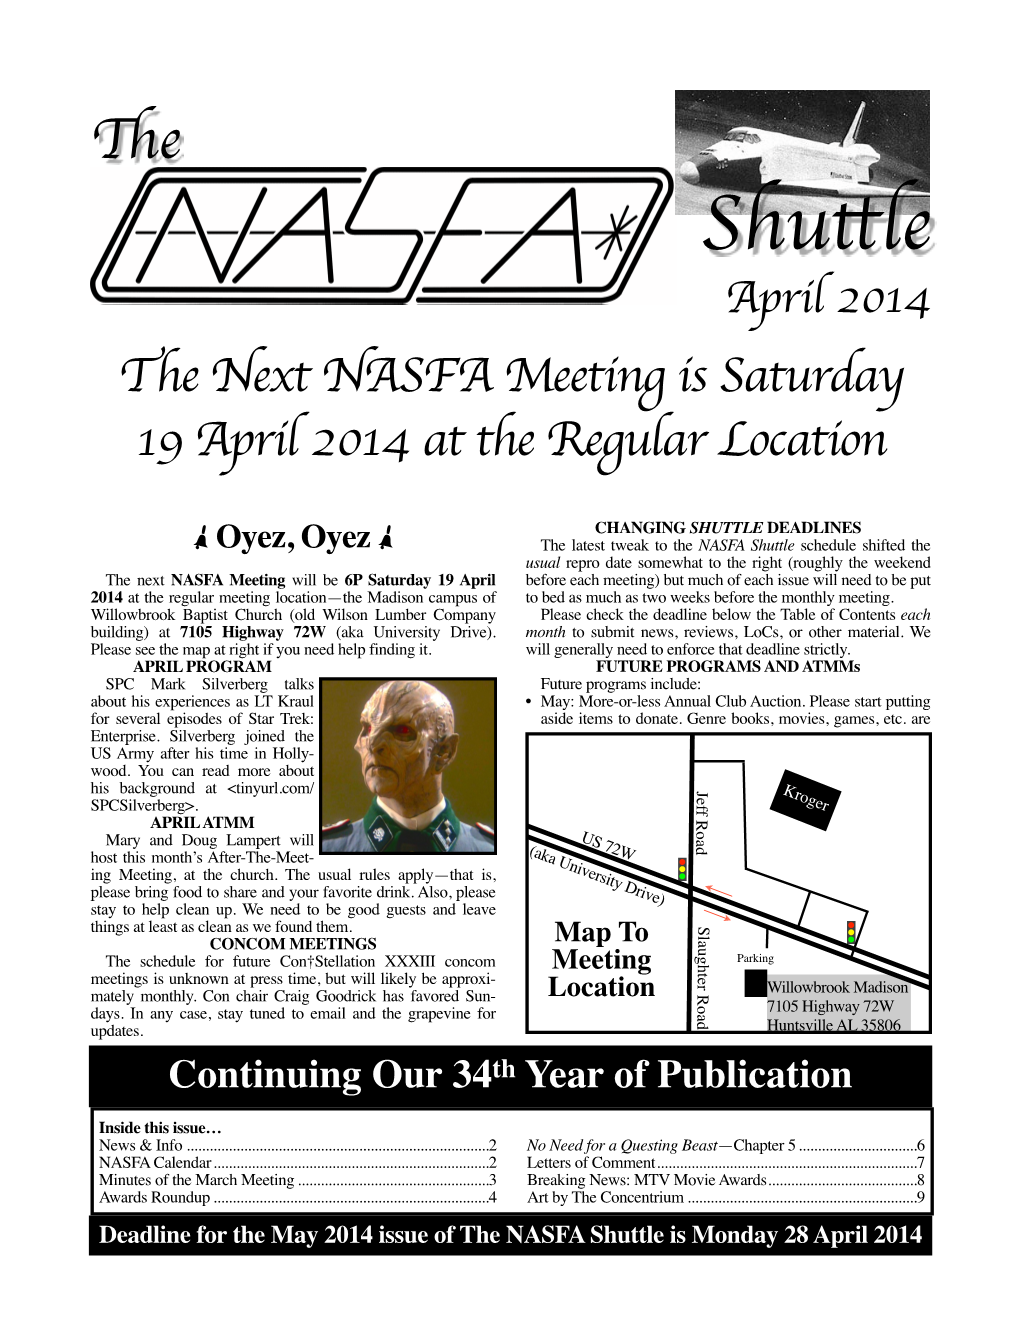 April 2014 NASFA Shuttle